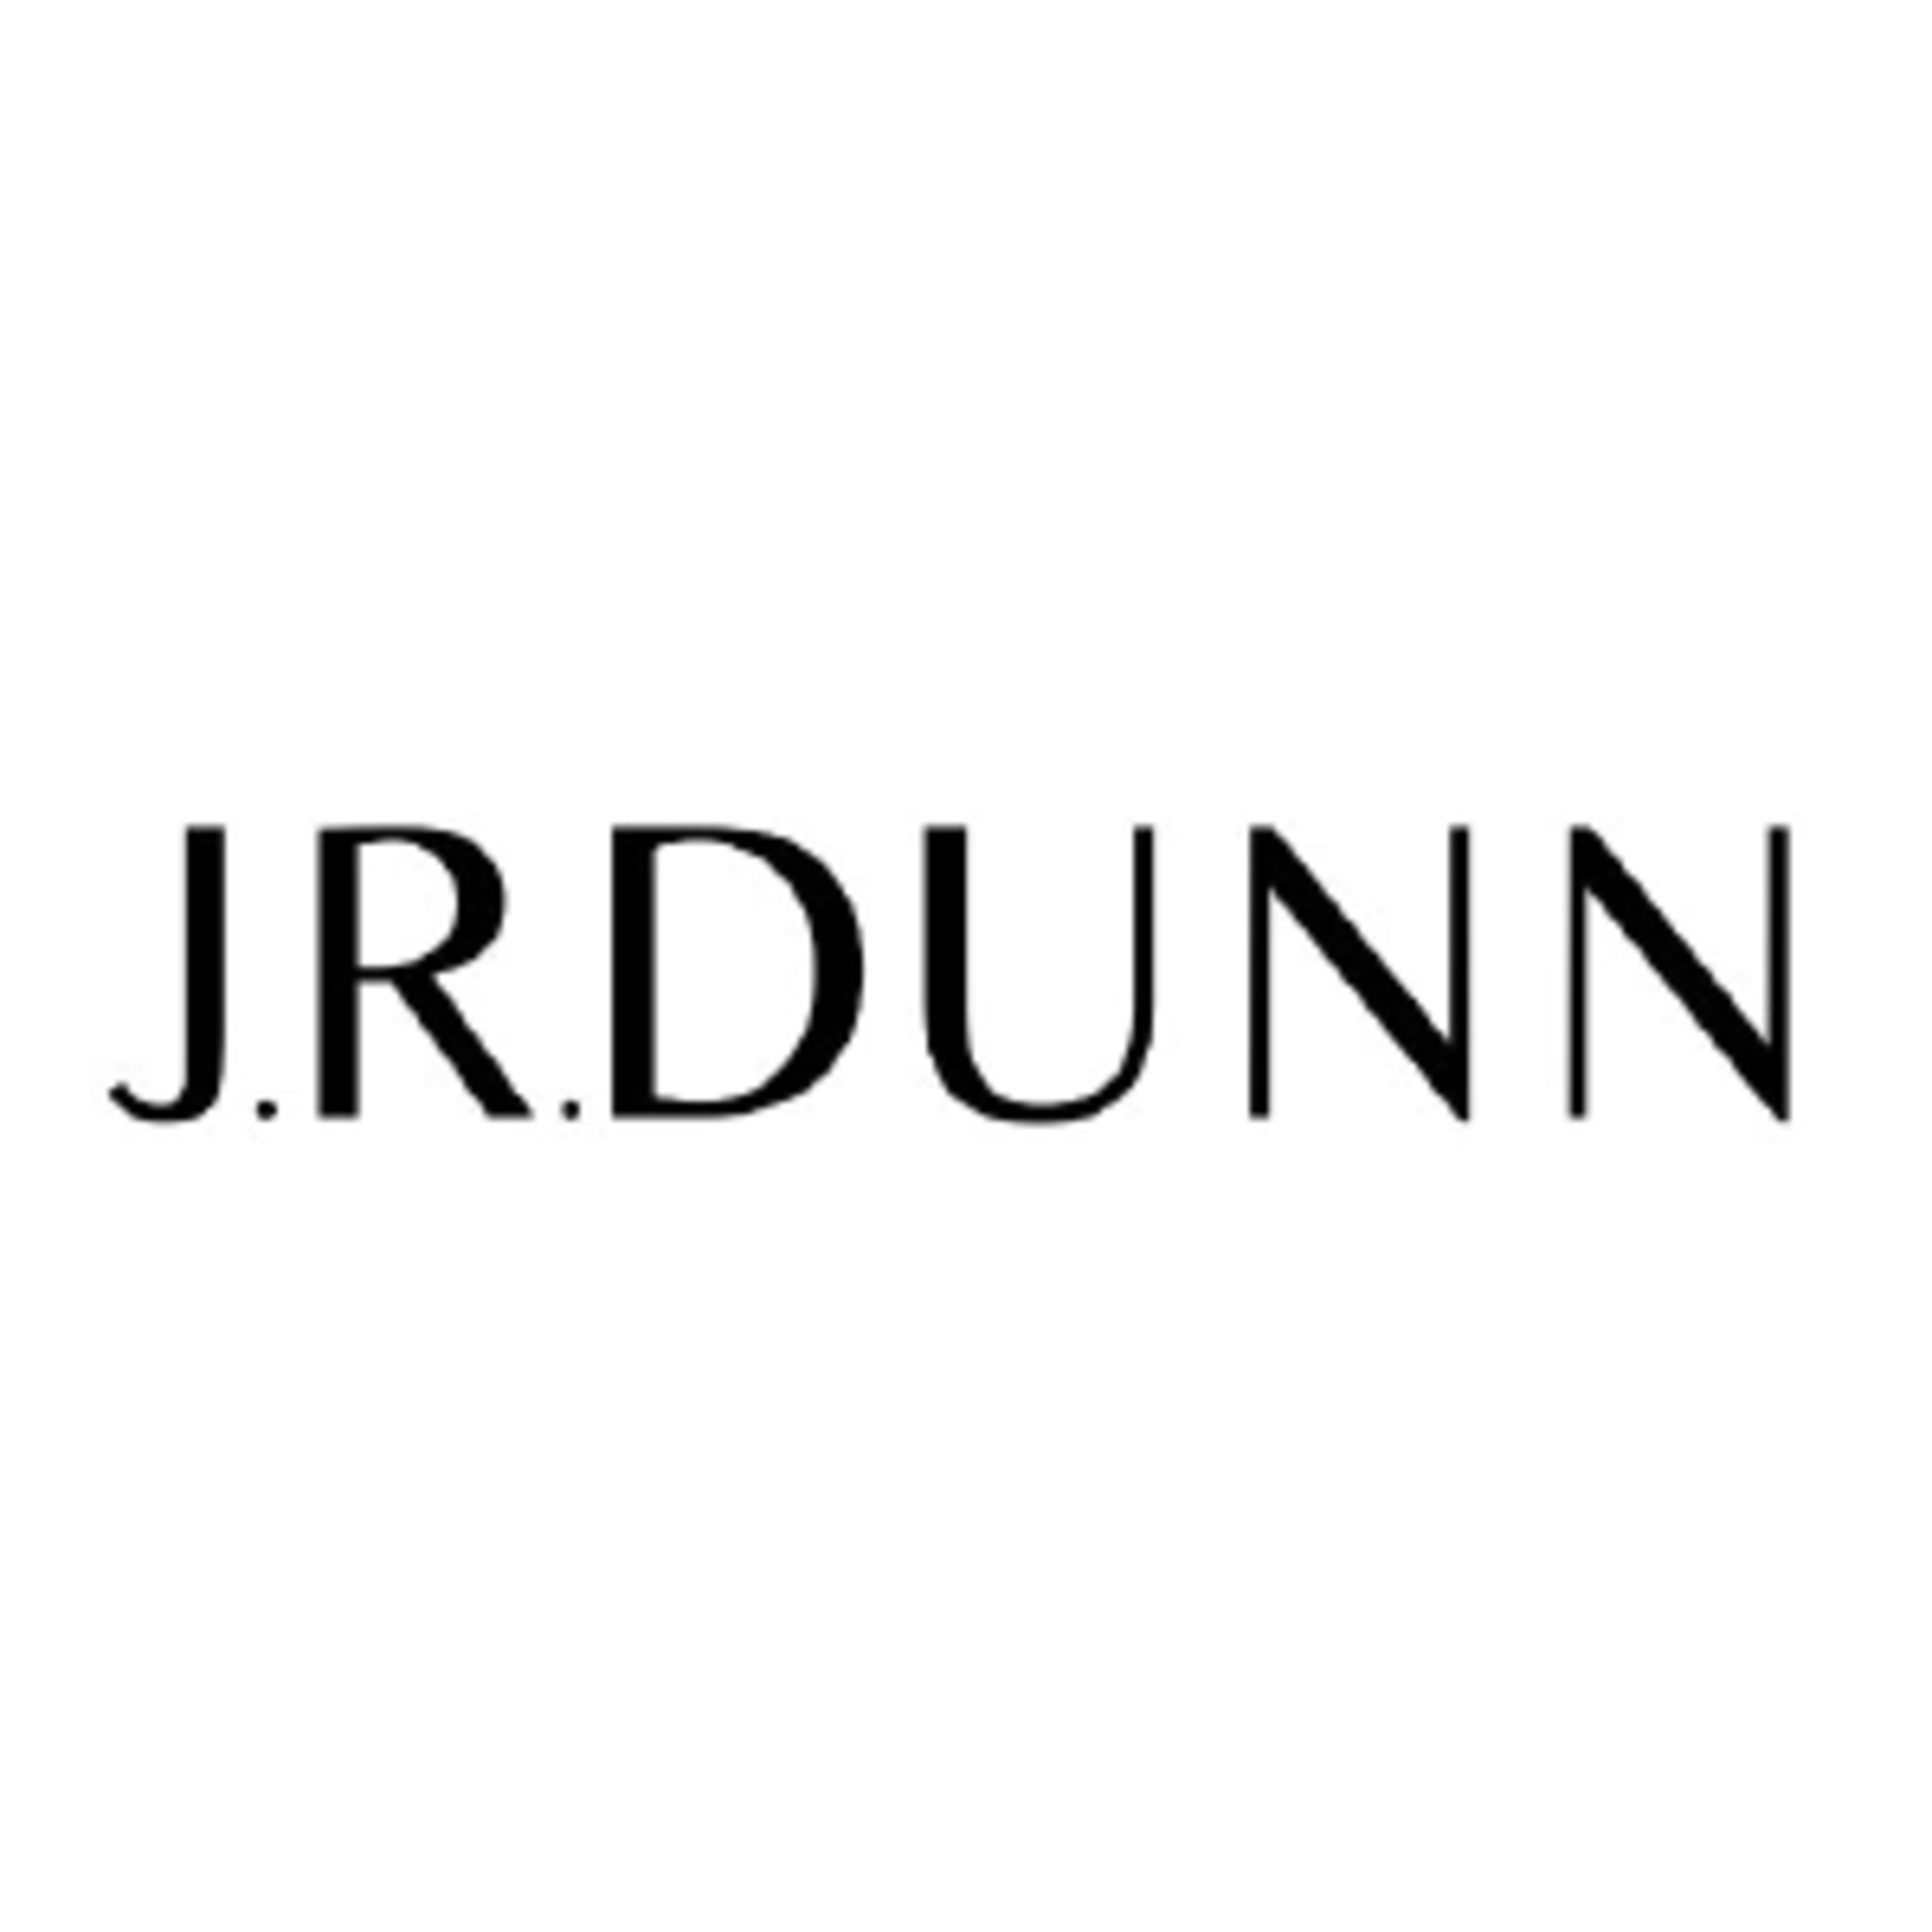 J.R. Dunn JewelersCode